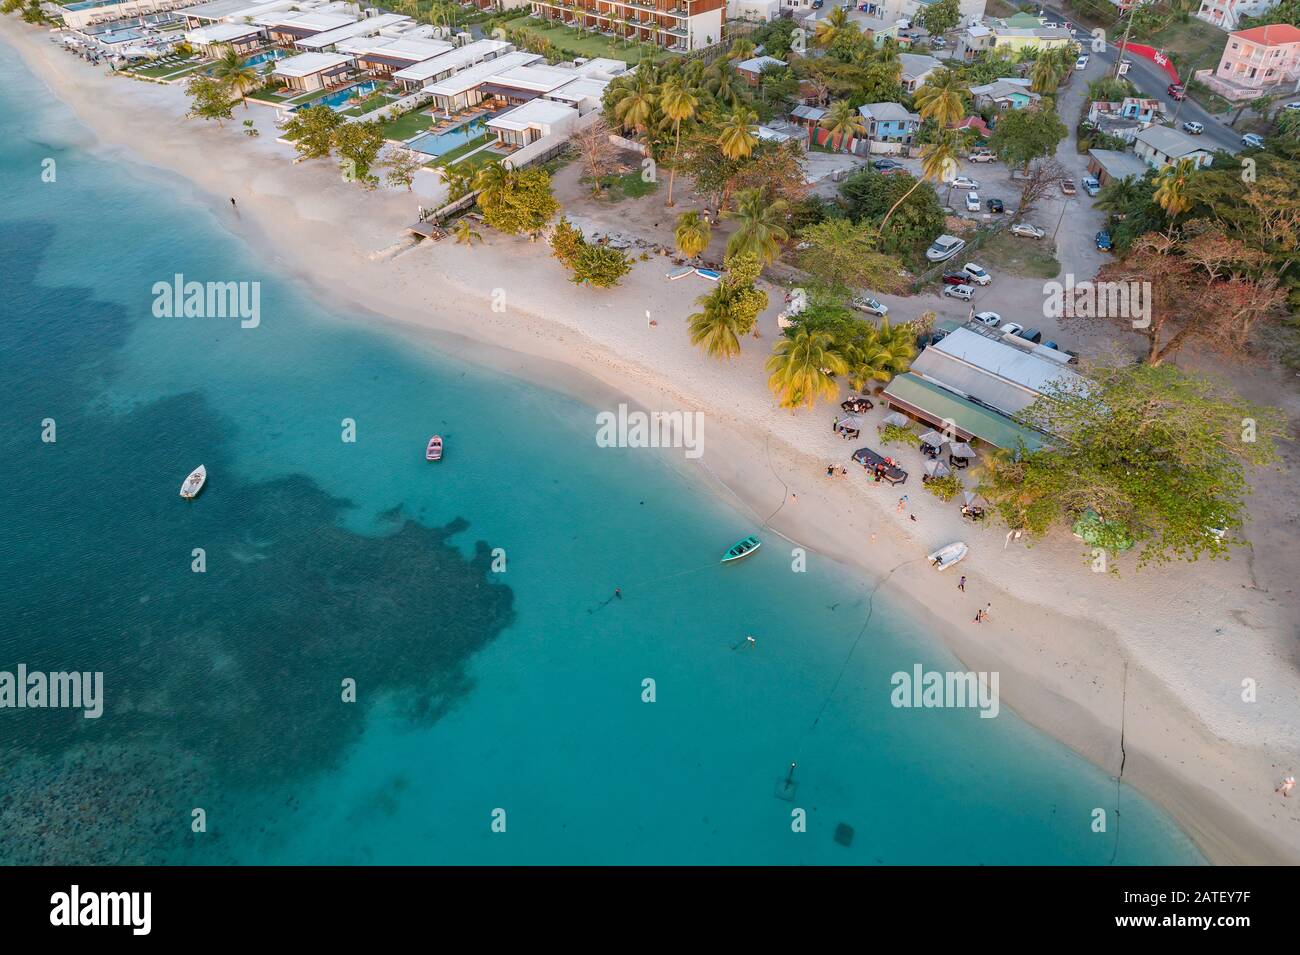 Aerial View of Grand Anse Bay, Grenada, Caribbean Sea Stock Photo